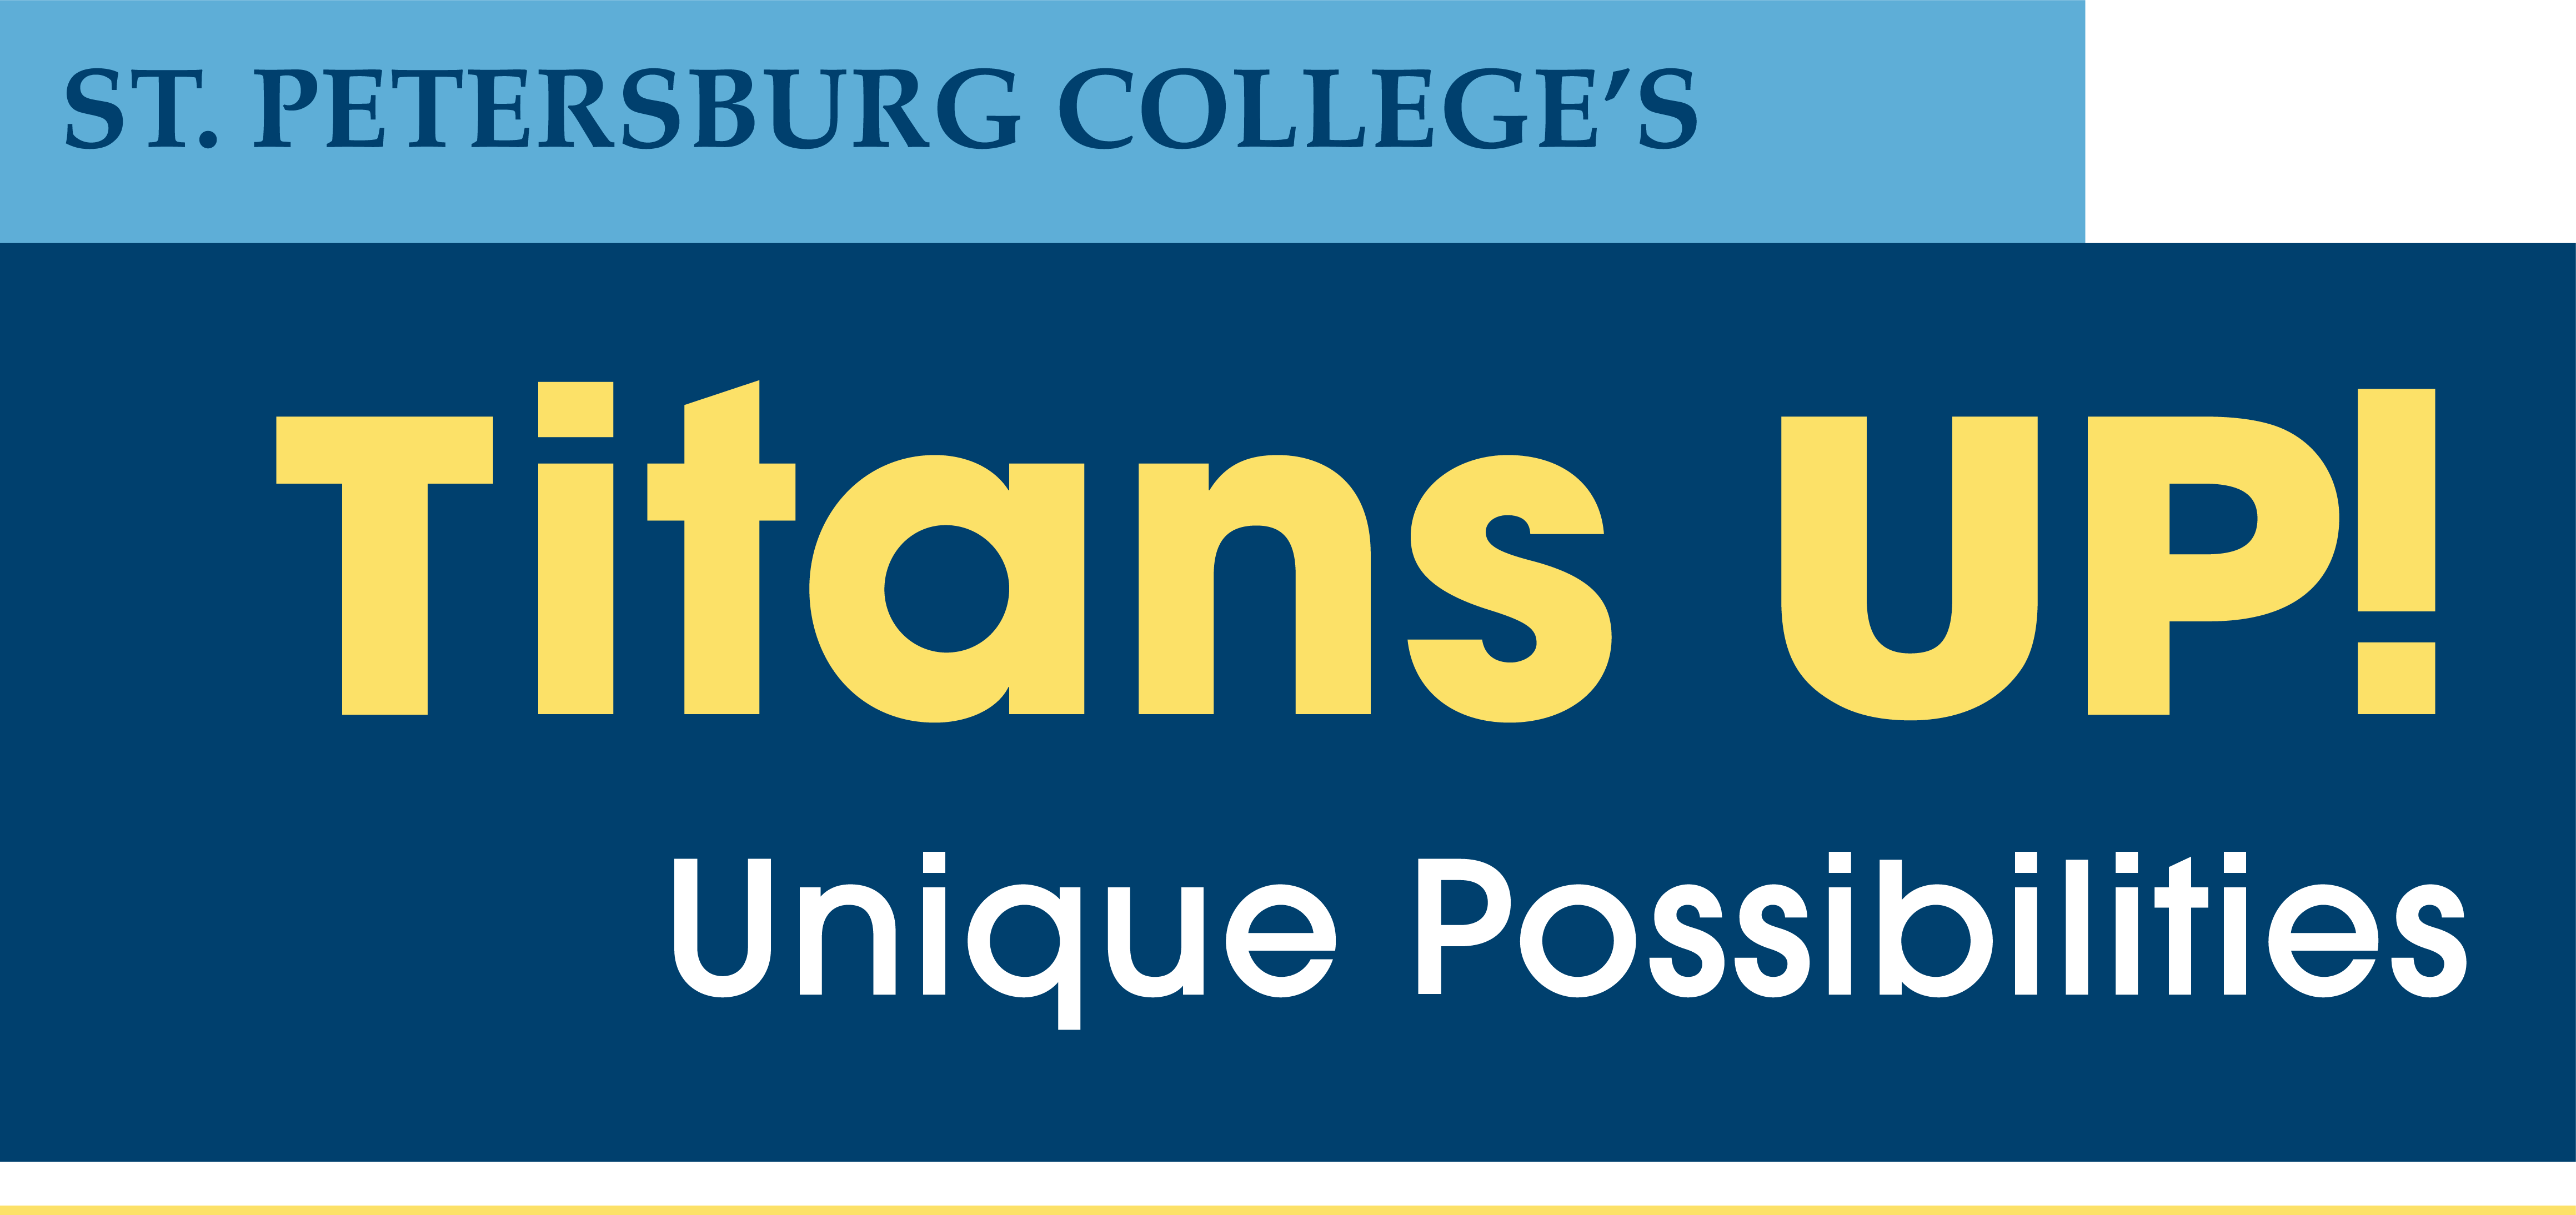 Titans UP logo. St. Petersburg College's Titans UP - Unique Possibilities